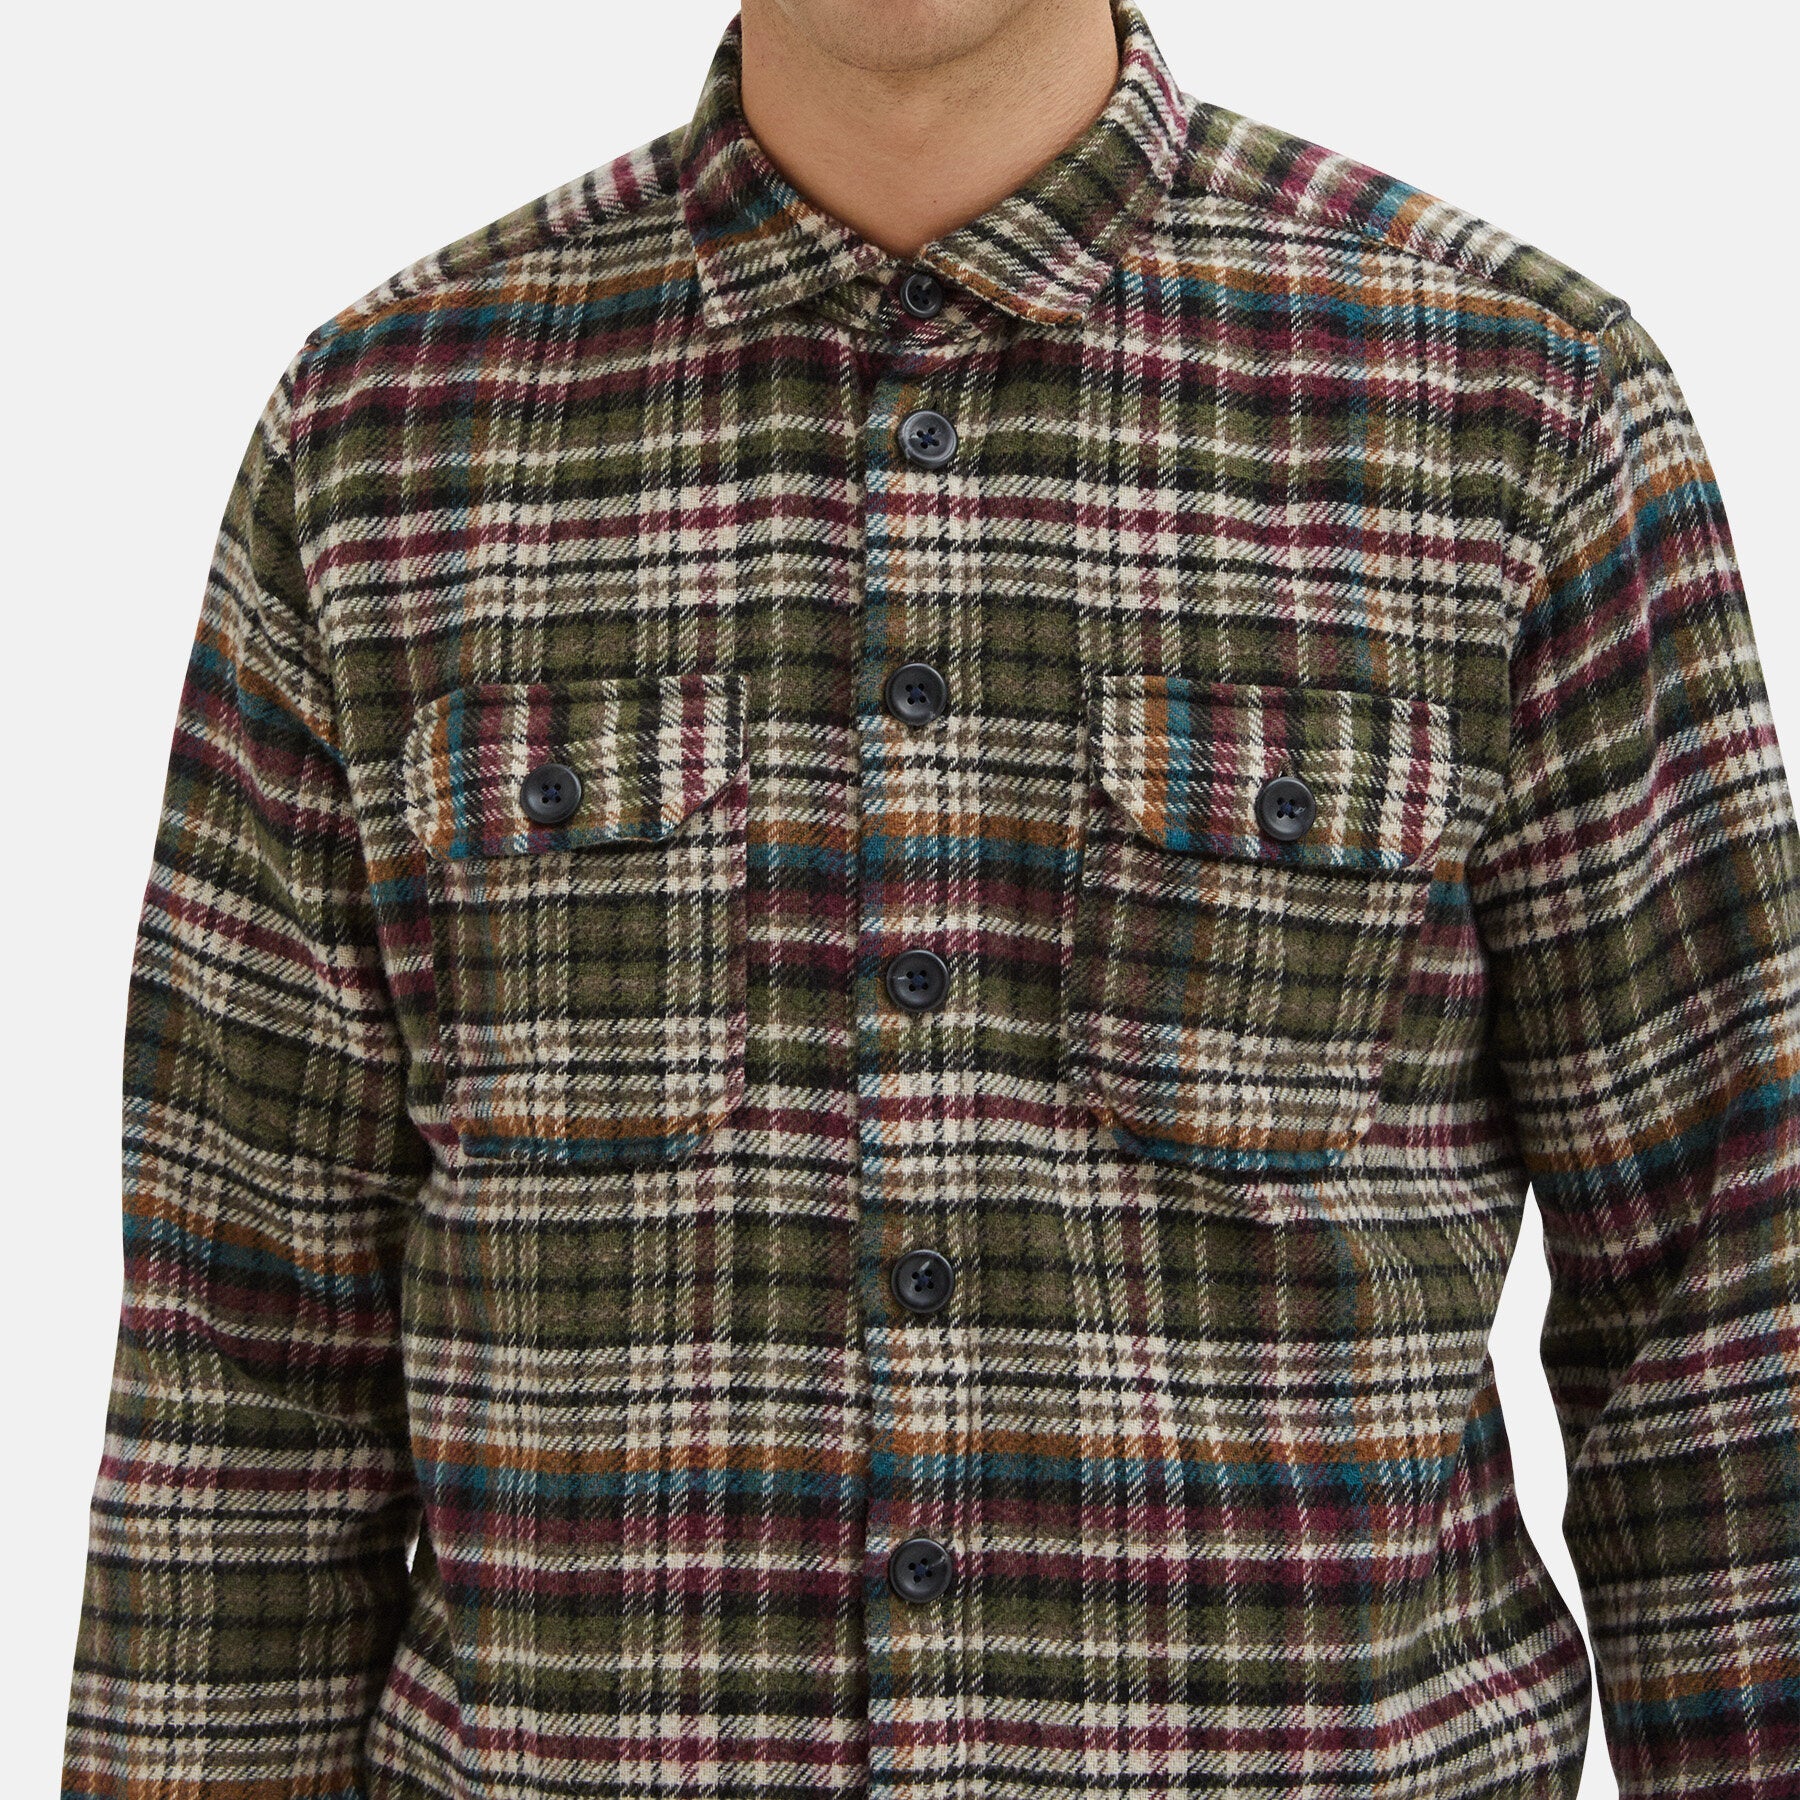 Overshirt with madras pattern